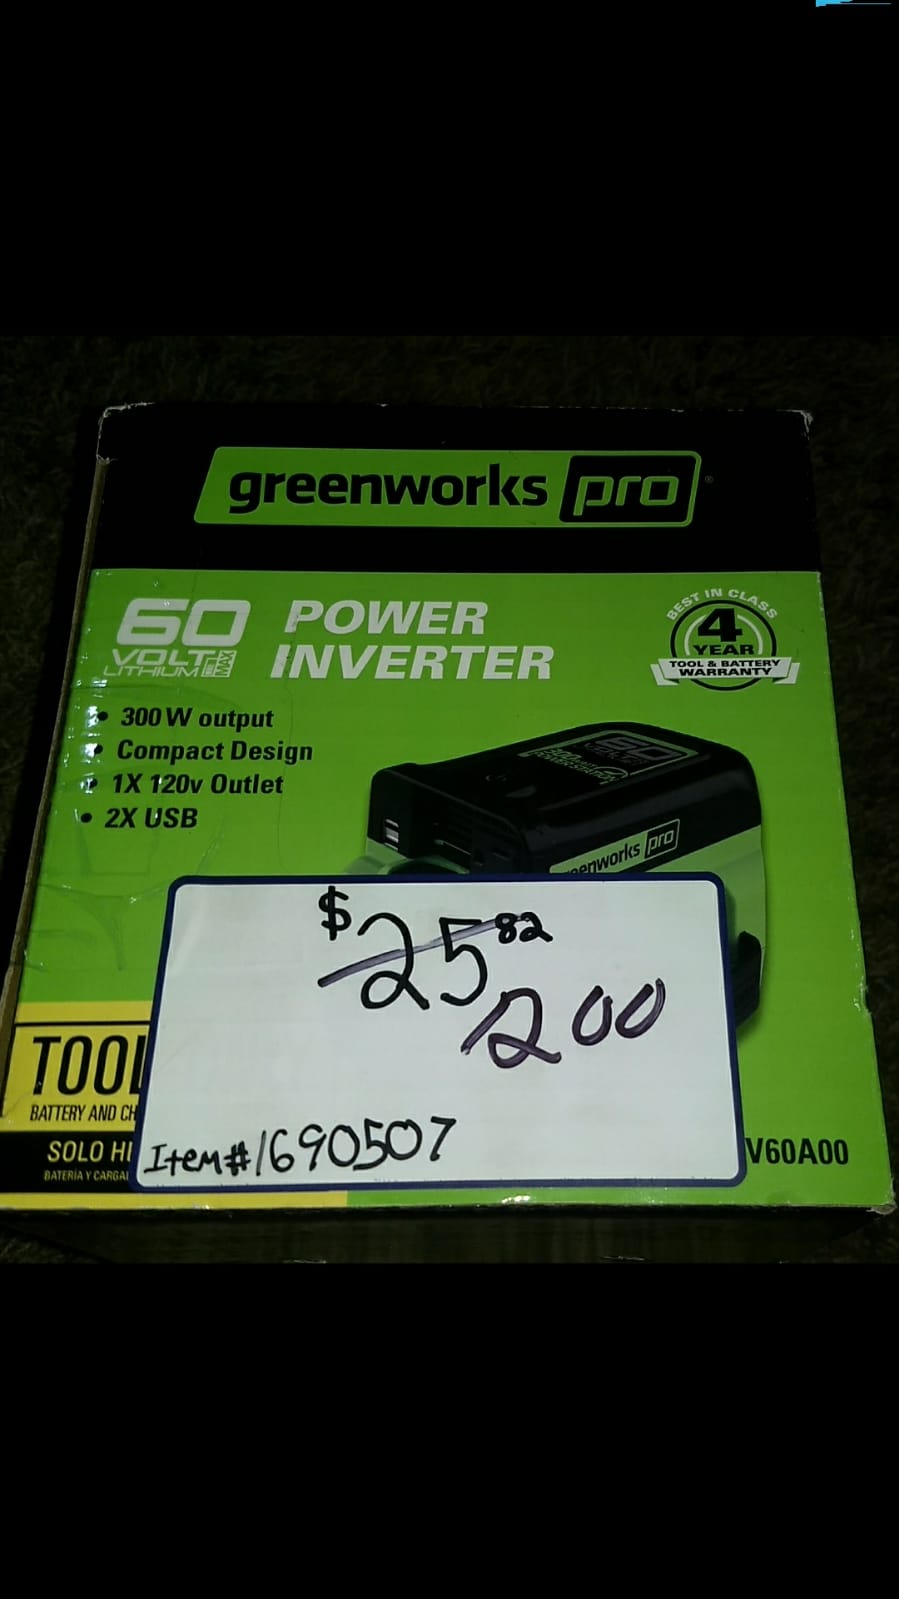 Lowes - Greenworks 60V Pro 300-Watt Battery Operated Power Inverter - $12 - Likely *HIGH* YMMV